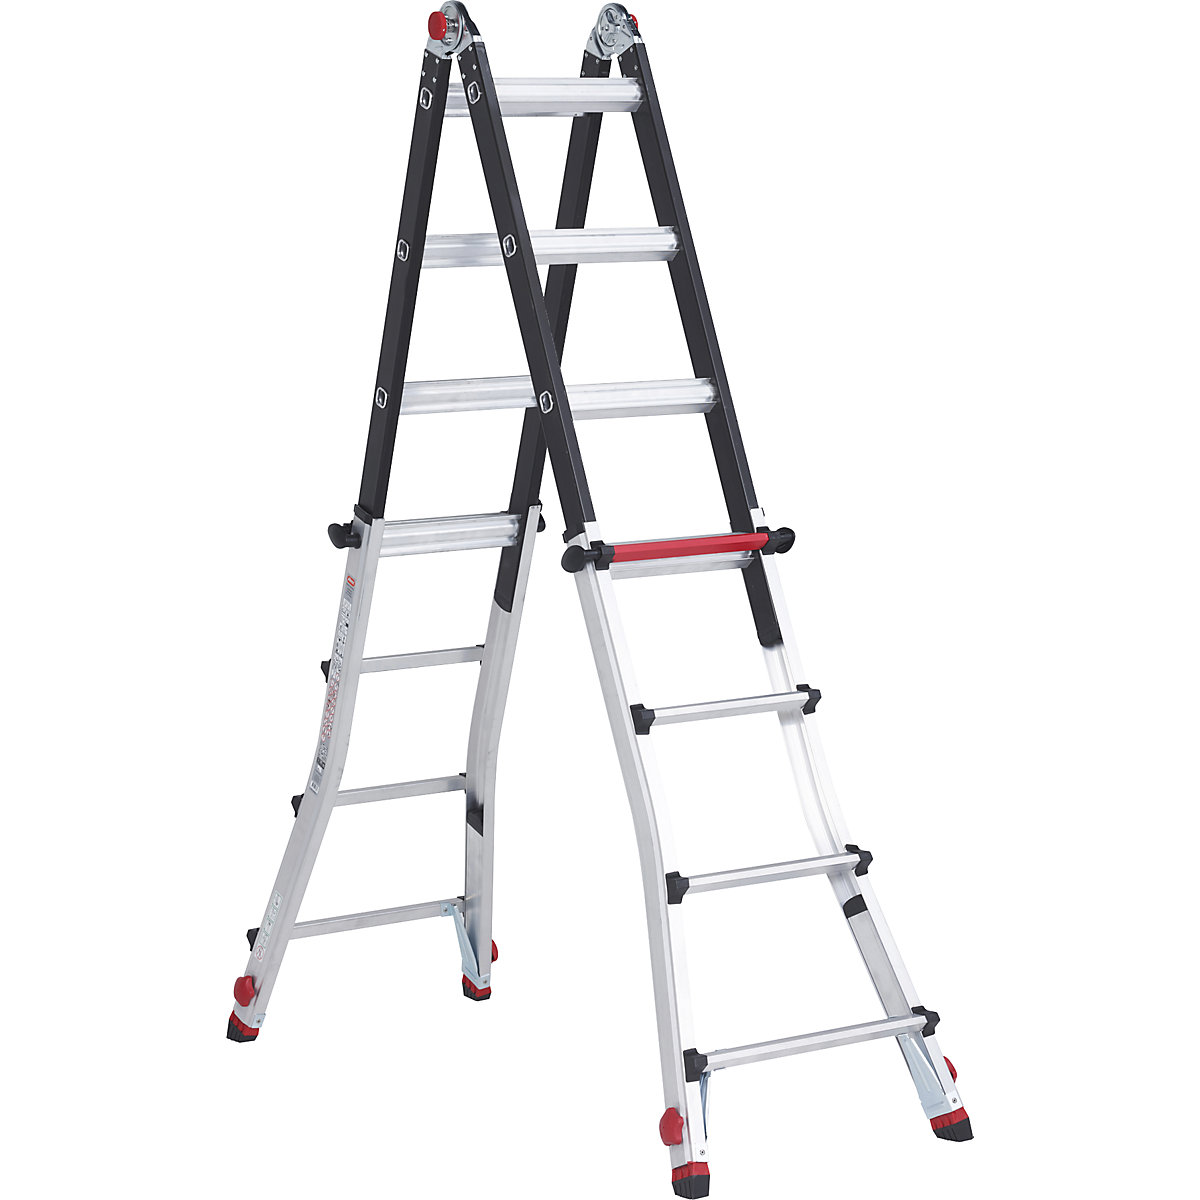 Telescopic folding ladder – Altrex